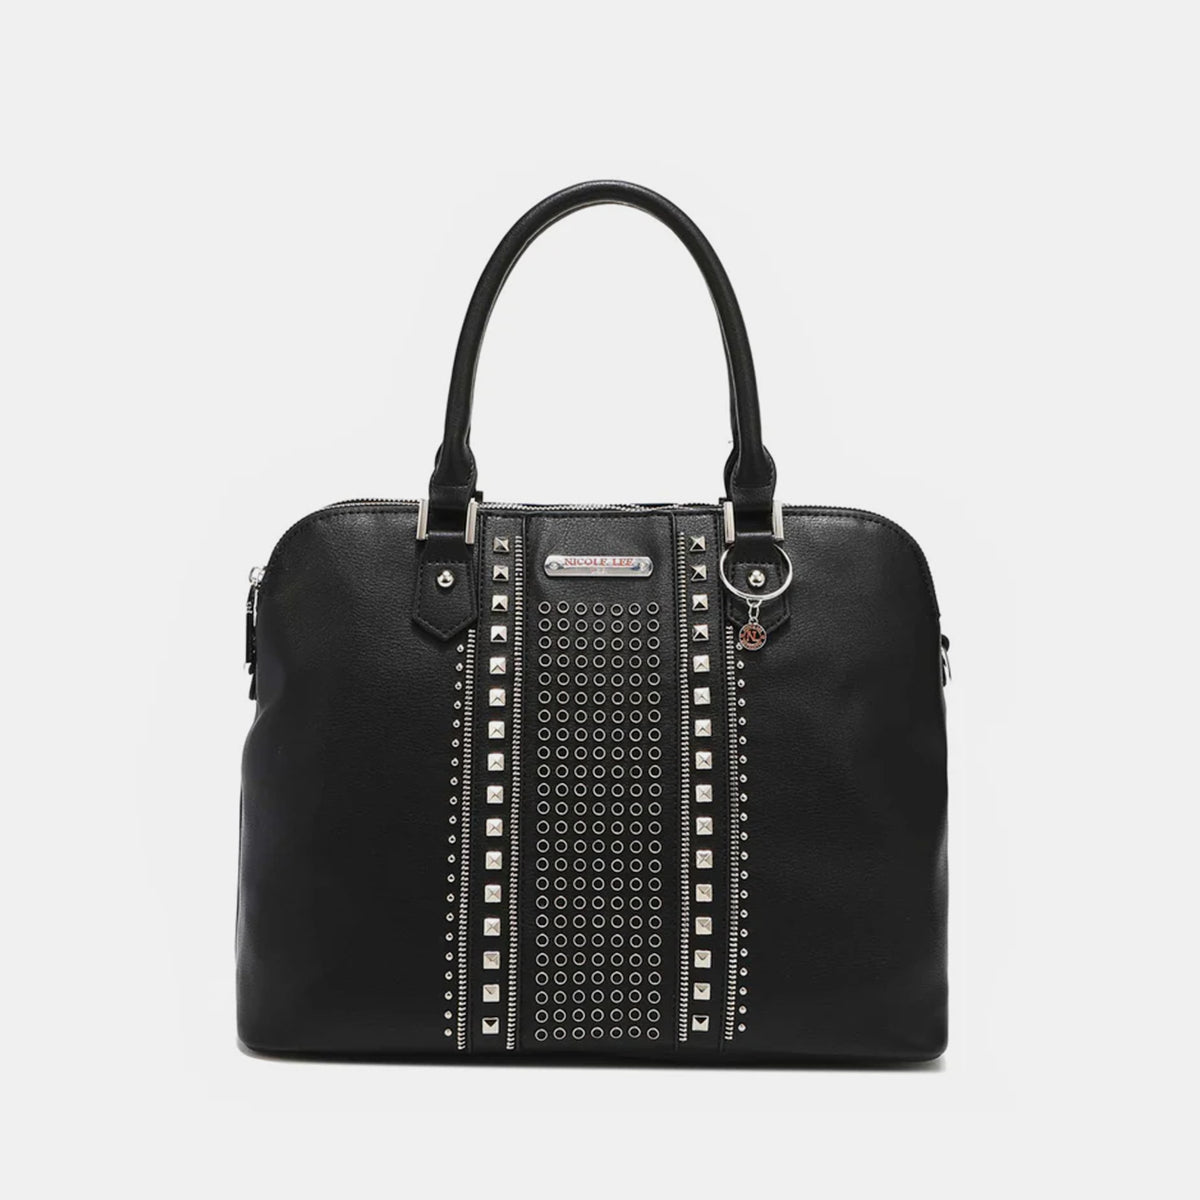 TEEK- NL Studded Decor Handbag BAG TEEK Trend Black  